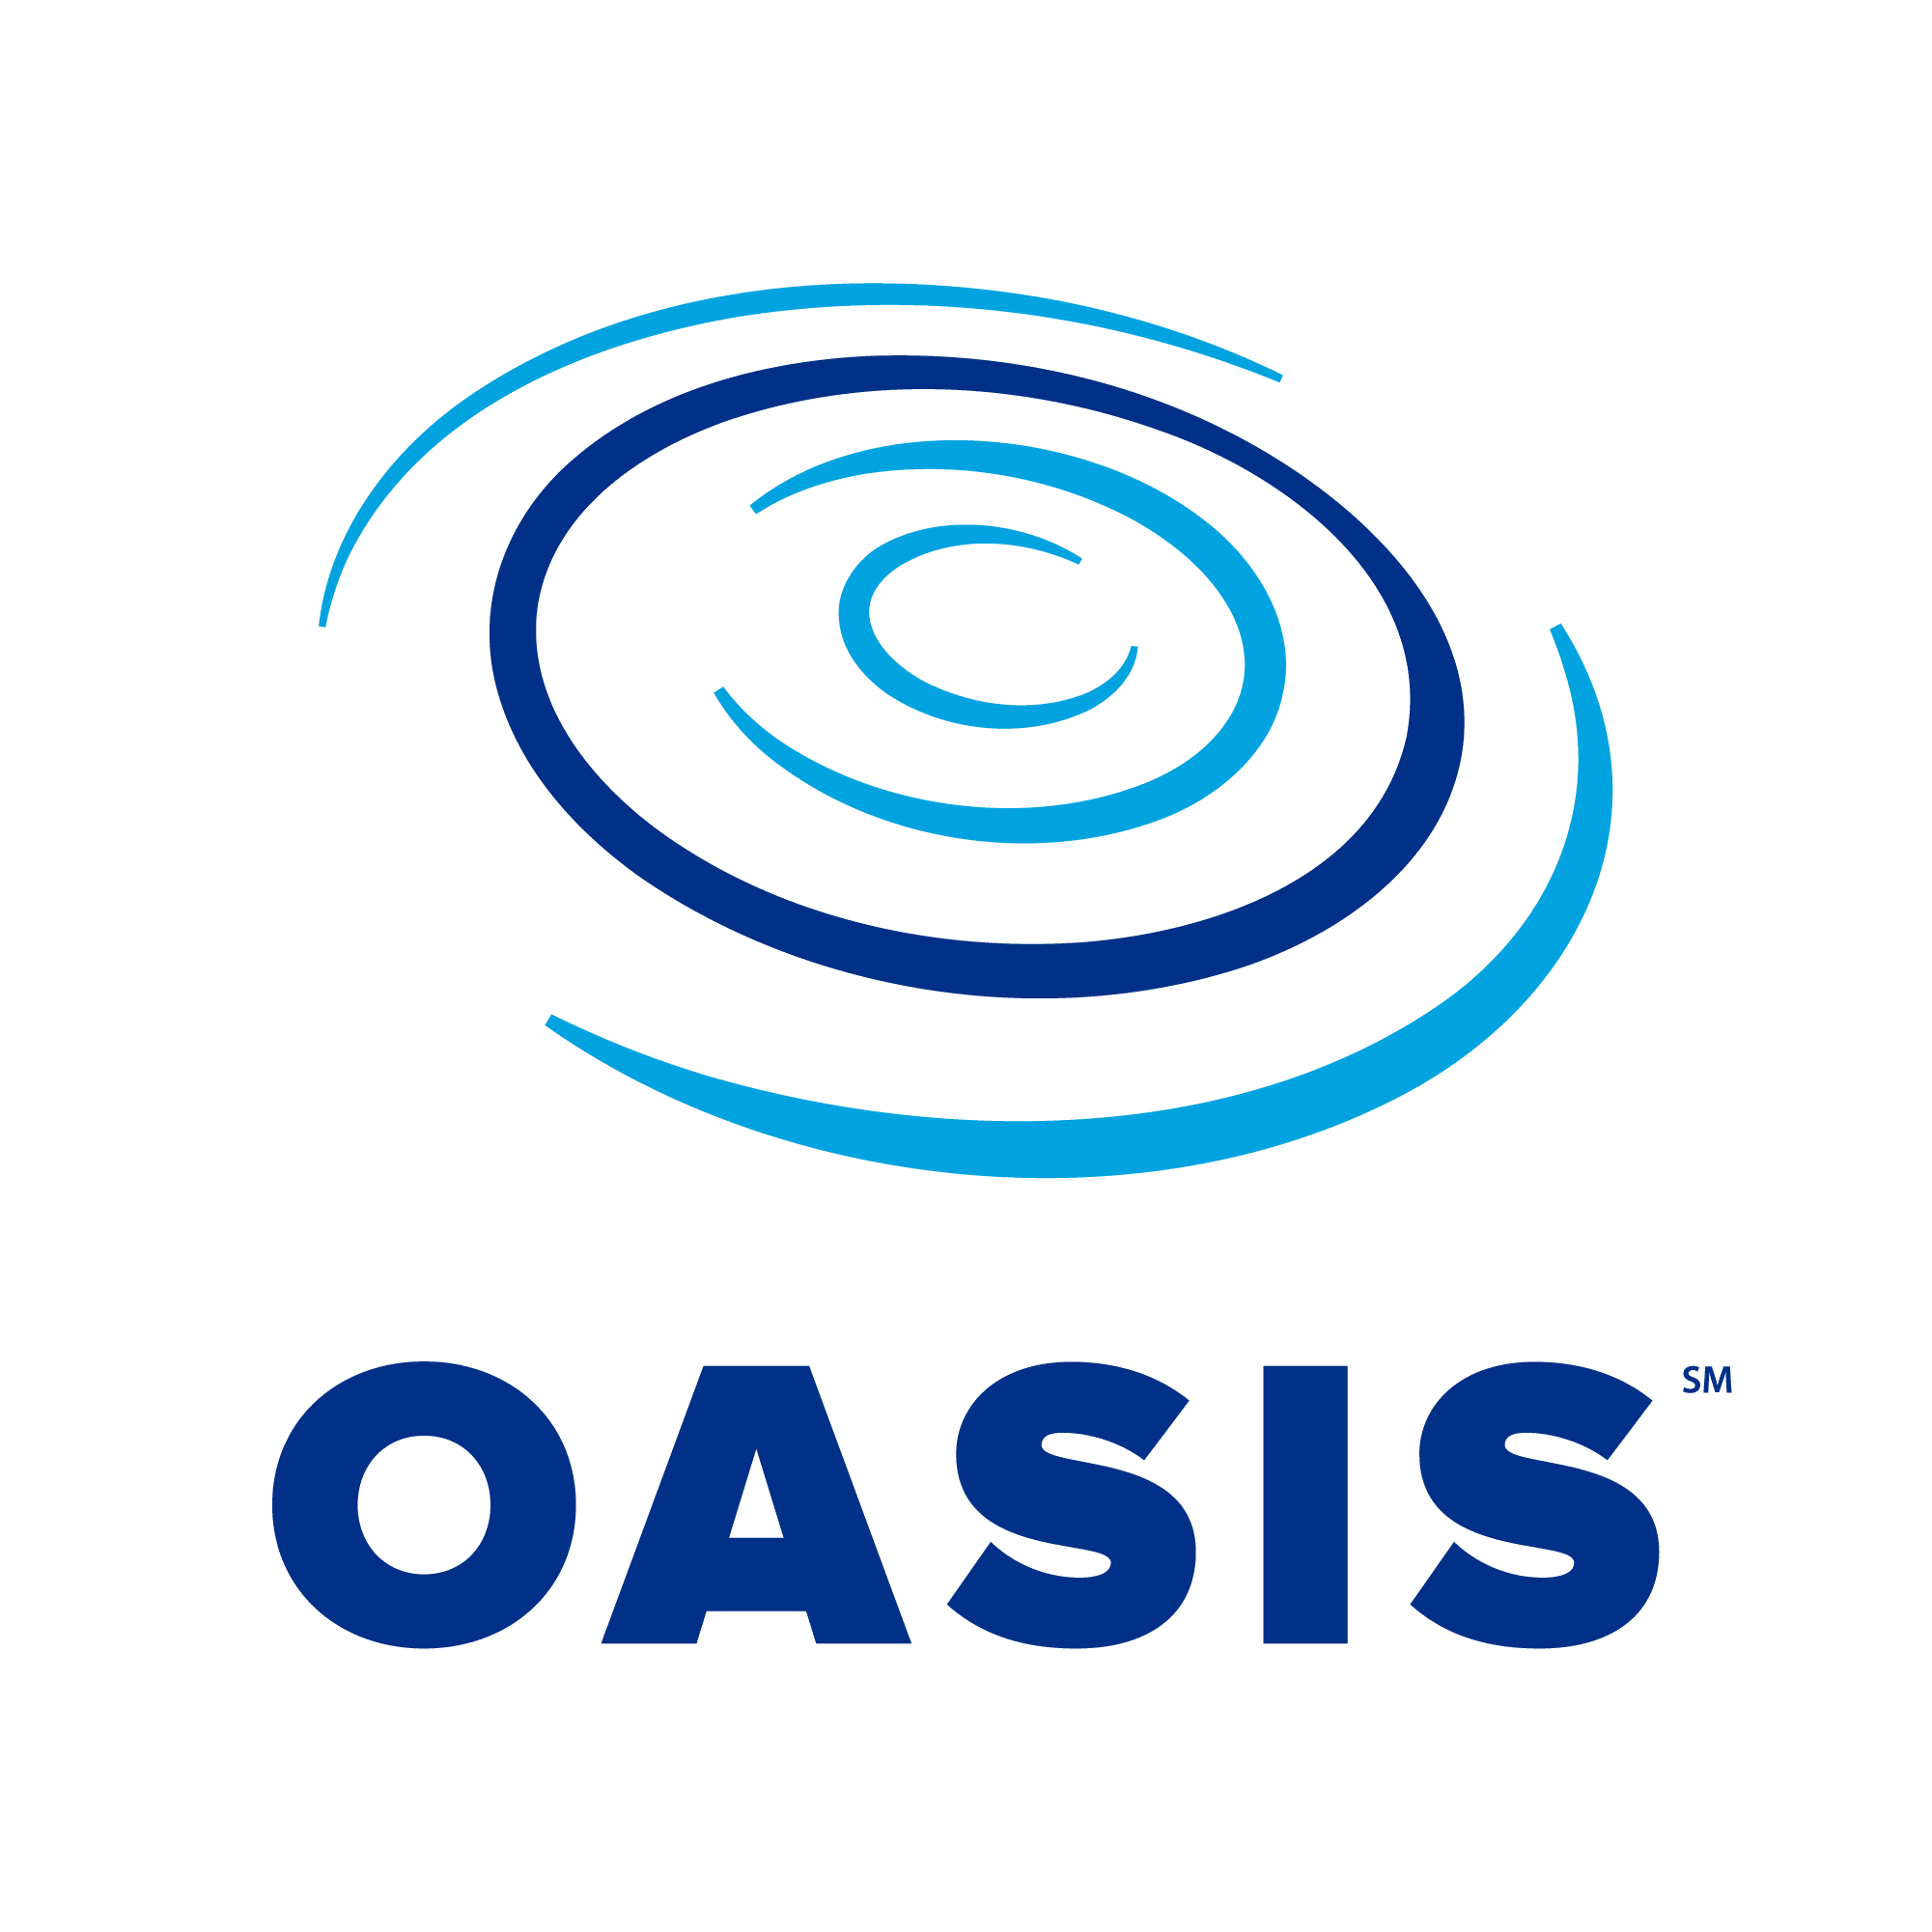 Oasis High School — Times Publishing Group, Inc.